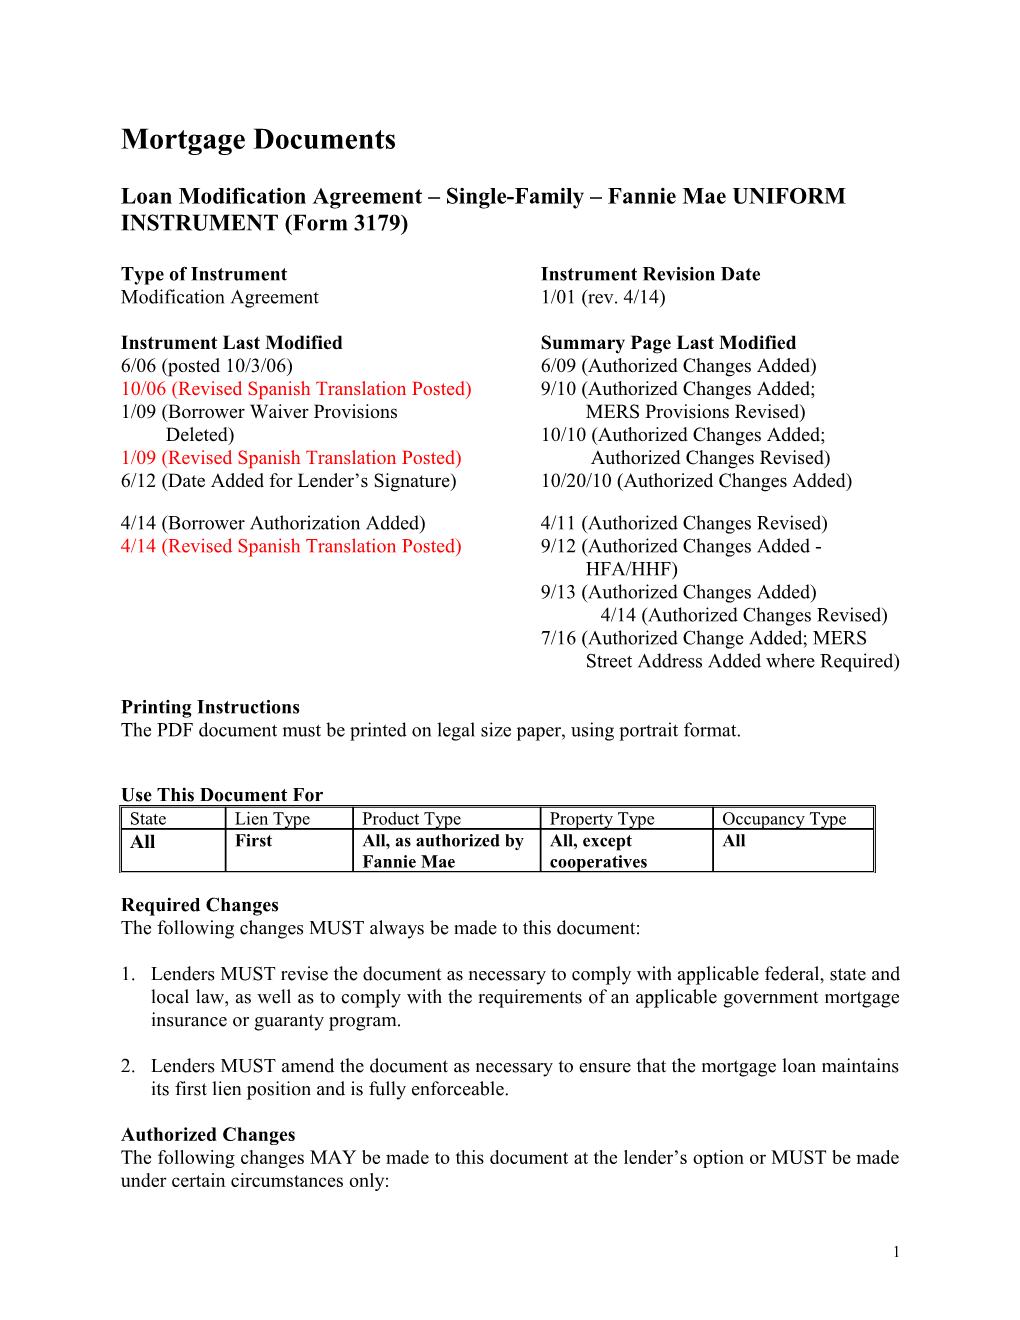 Mortgage Documents:Loan Modification Agreement – Single-Family – Fannie Mae Uniform Instrument